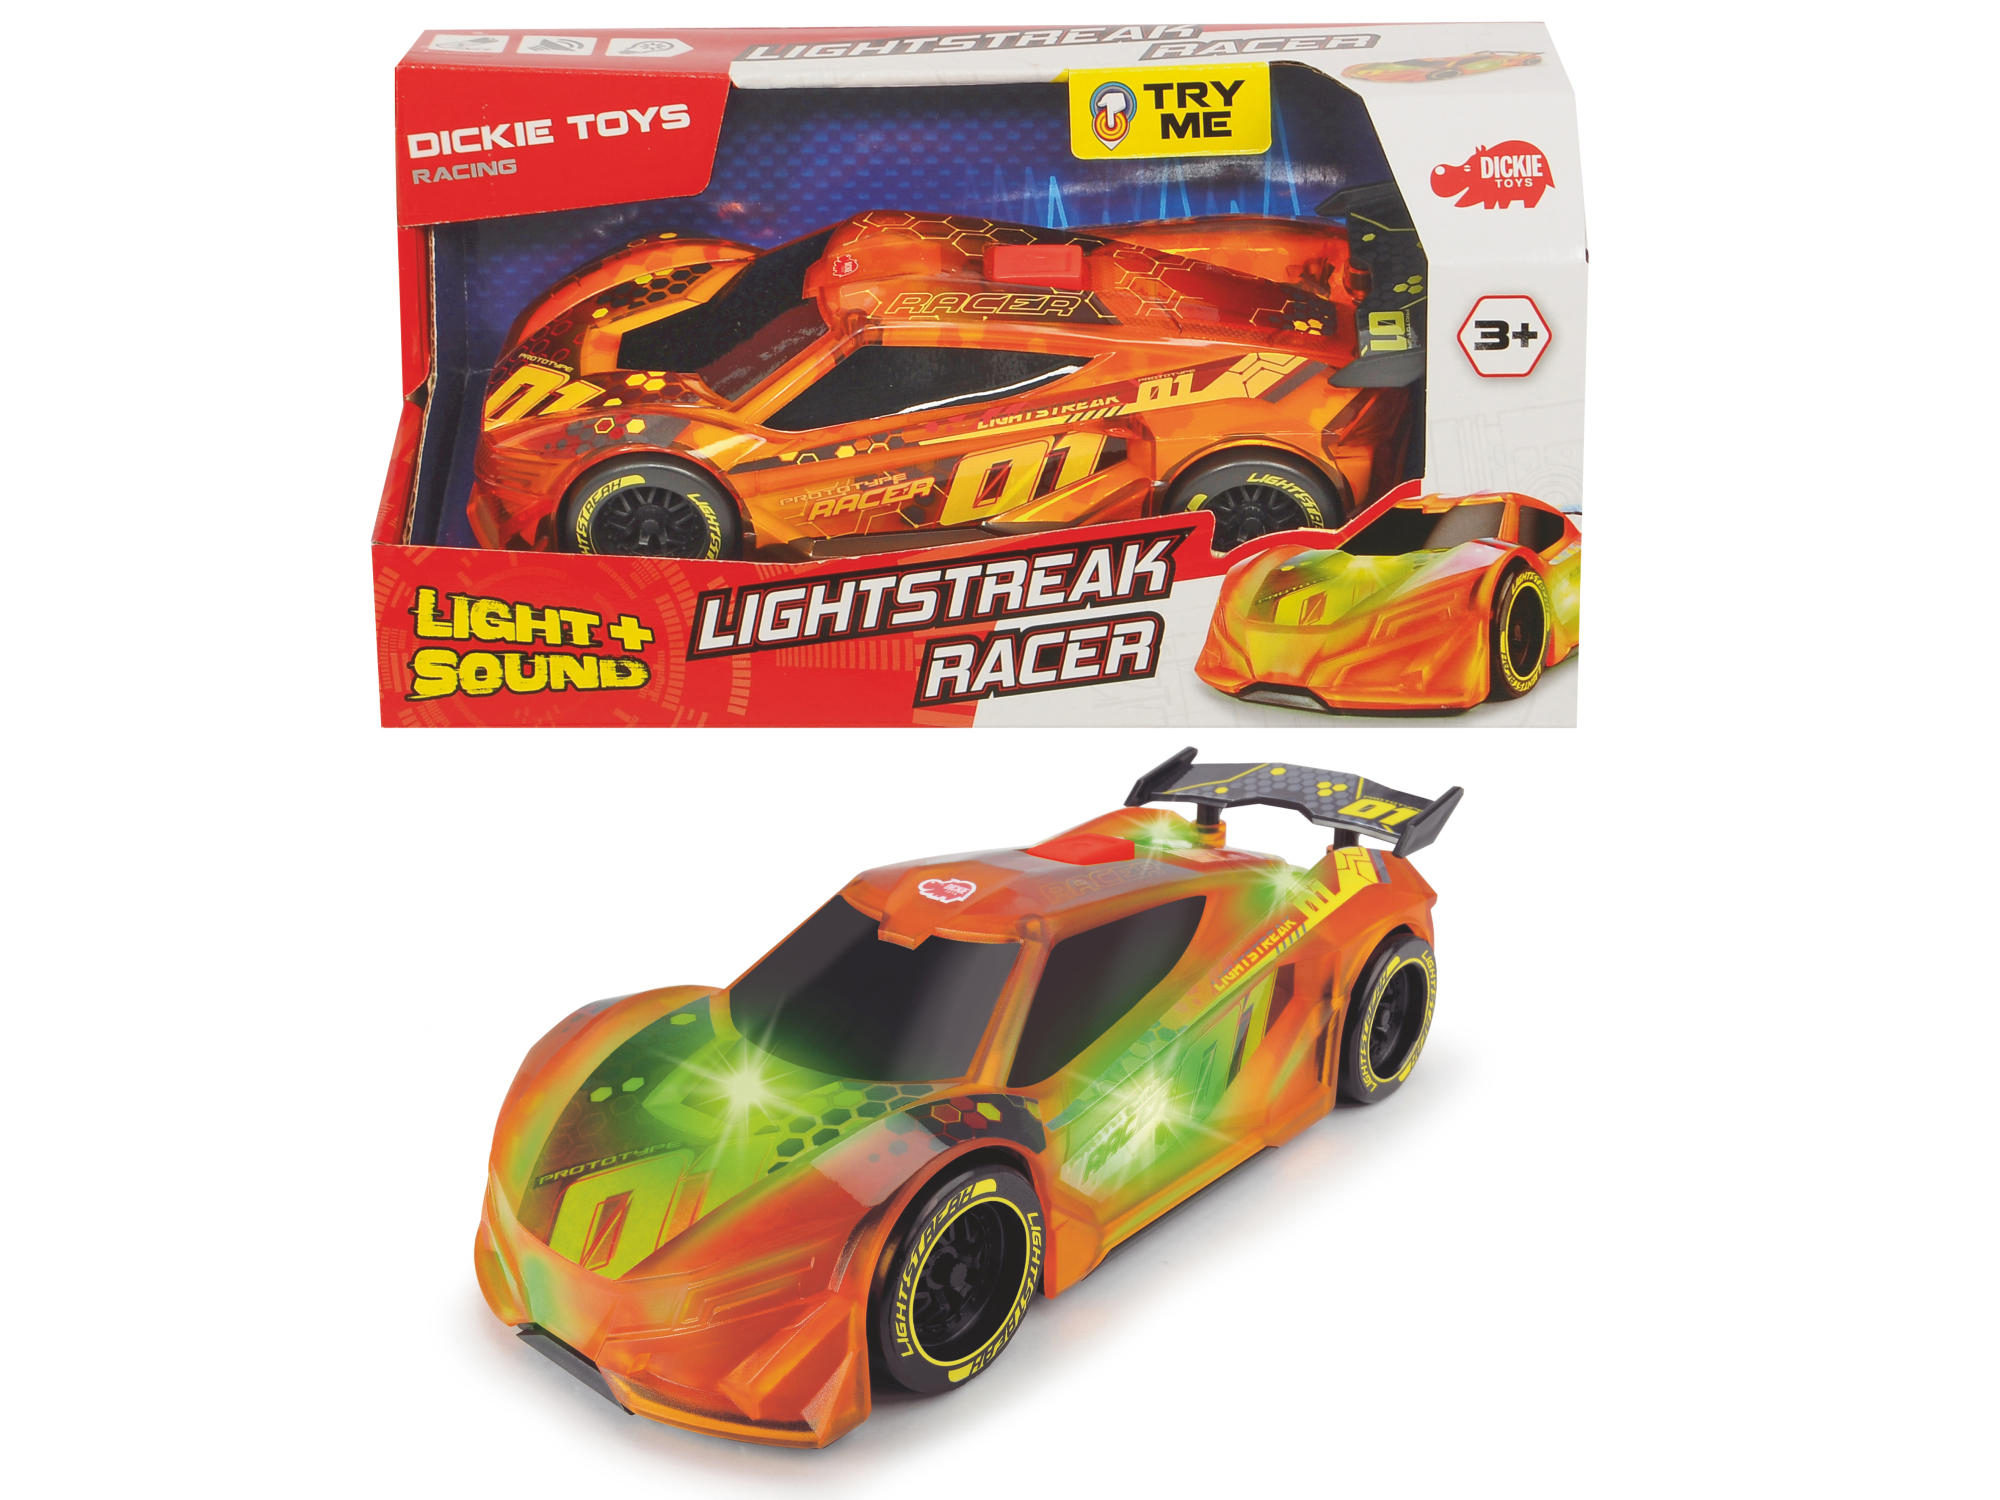 DICKIE-TOYS Lightstreak Racer Spielzeugauto Orange